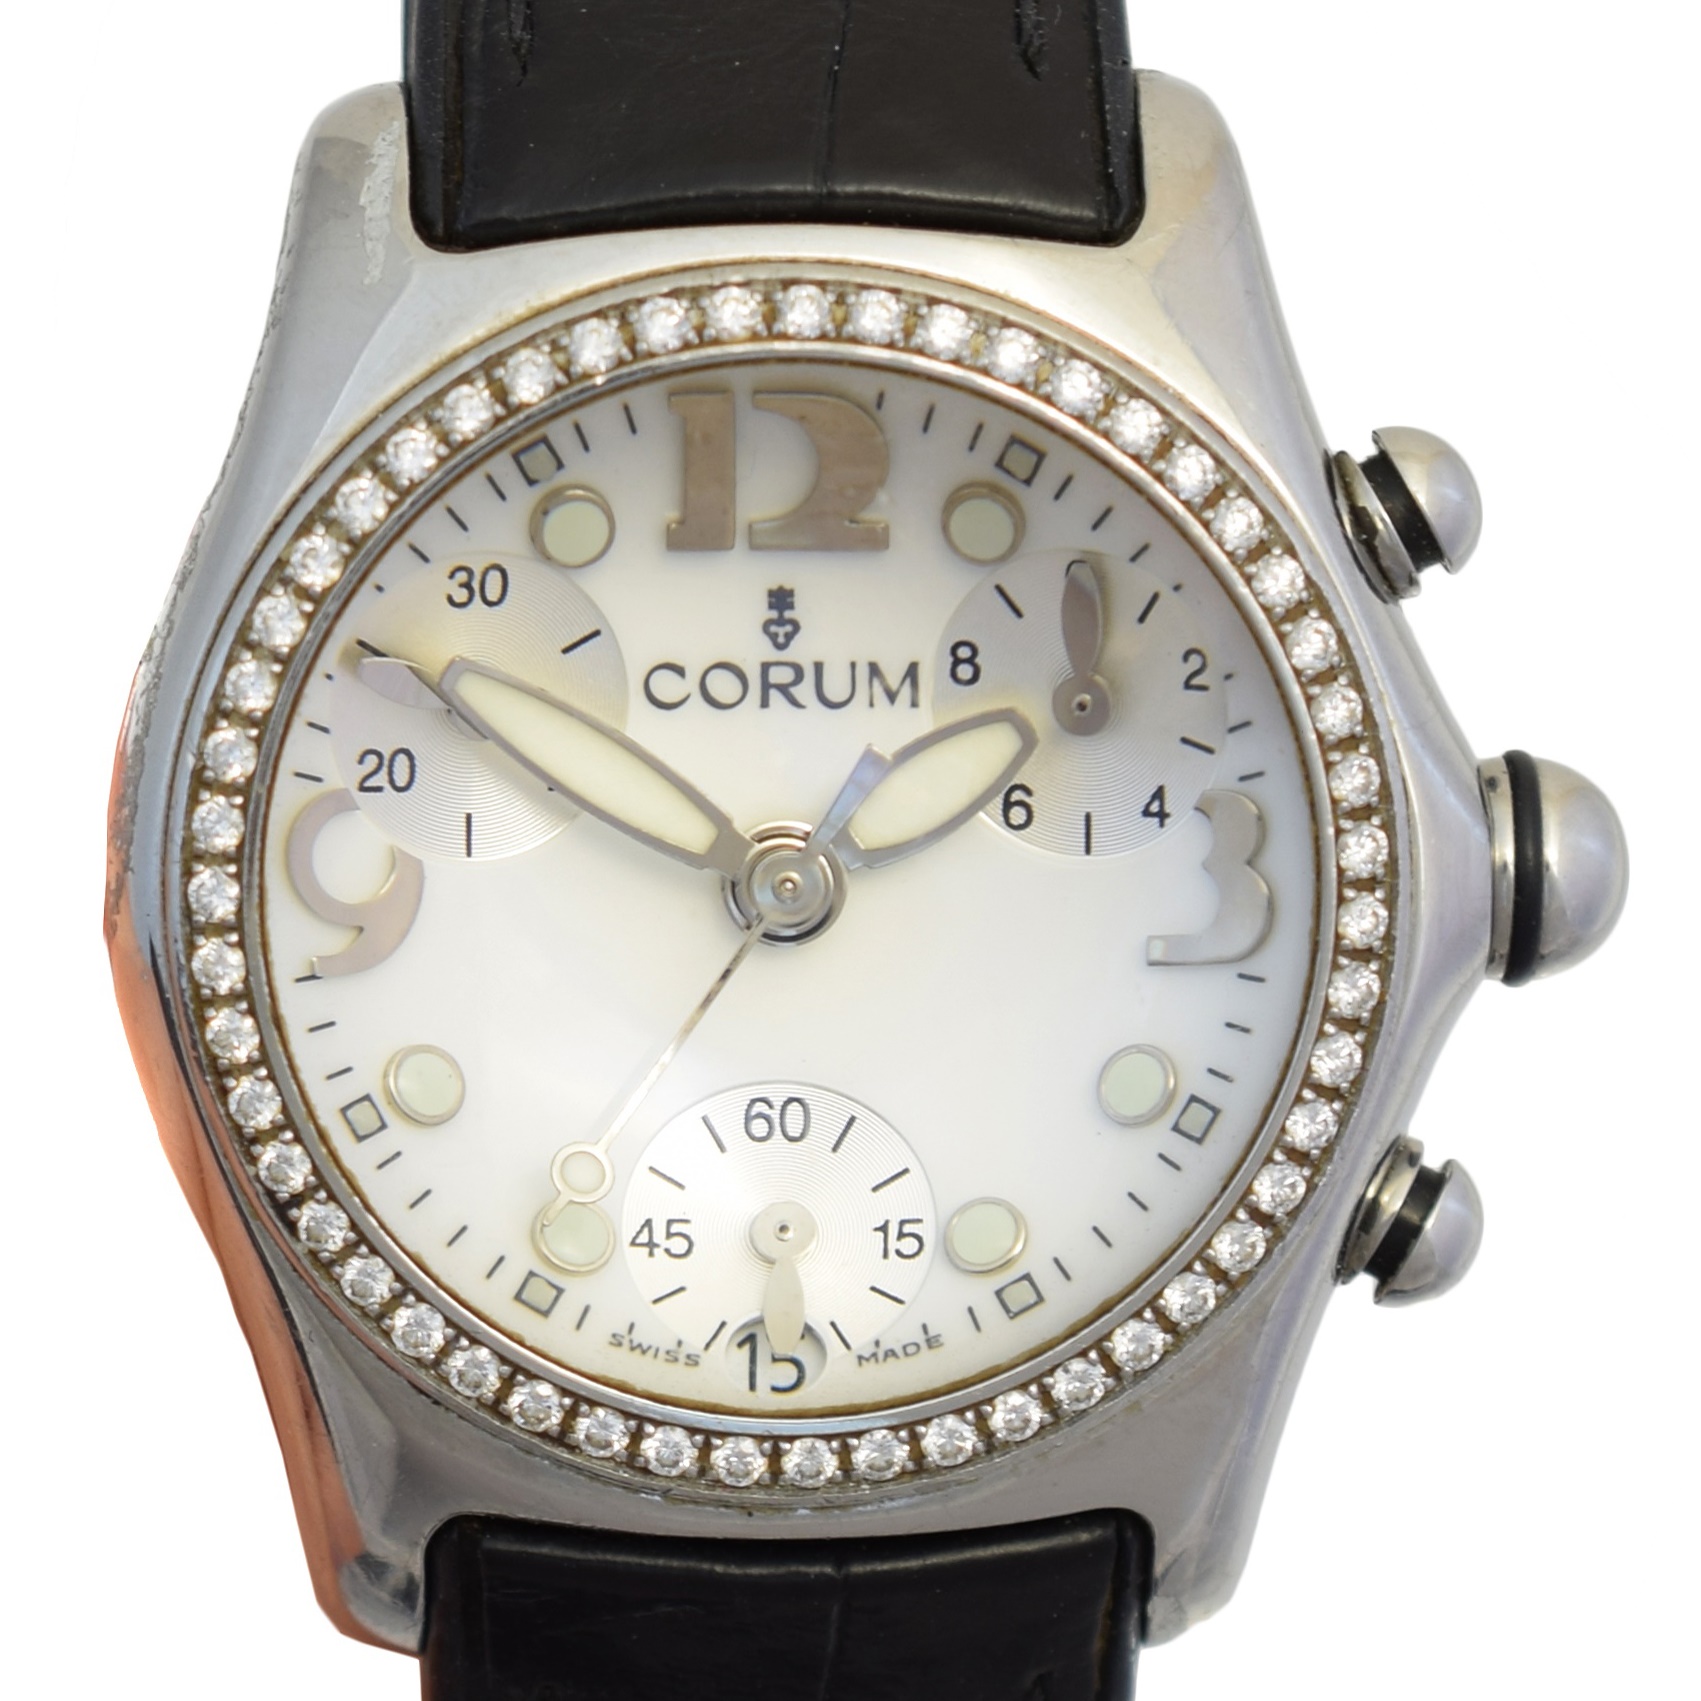 Corum Watches Auction